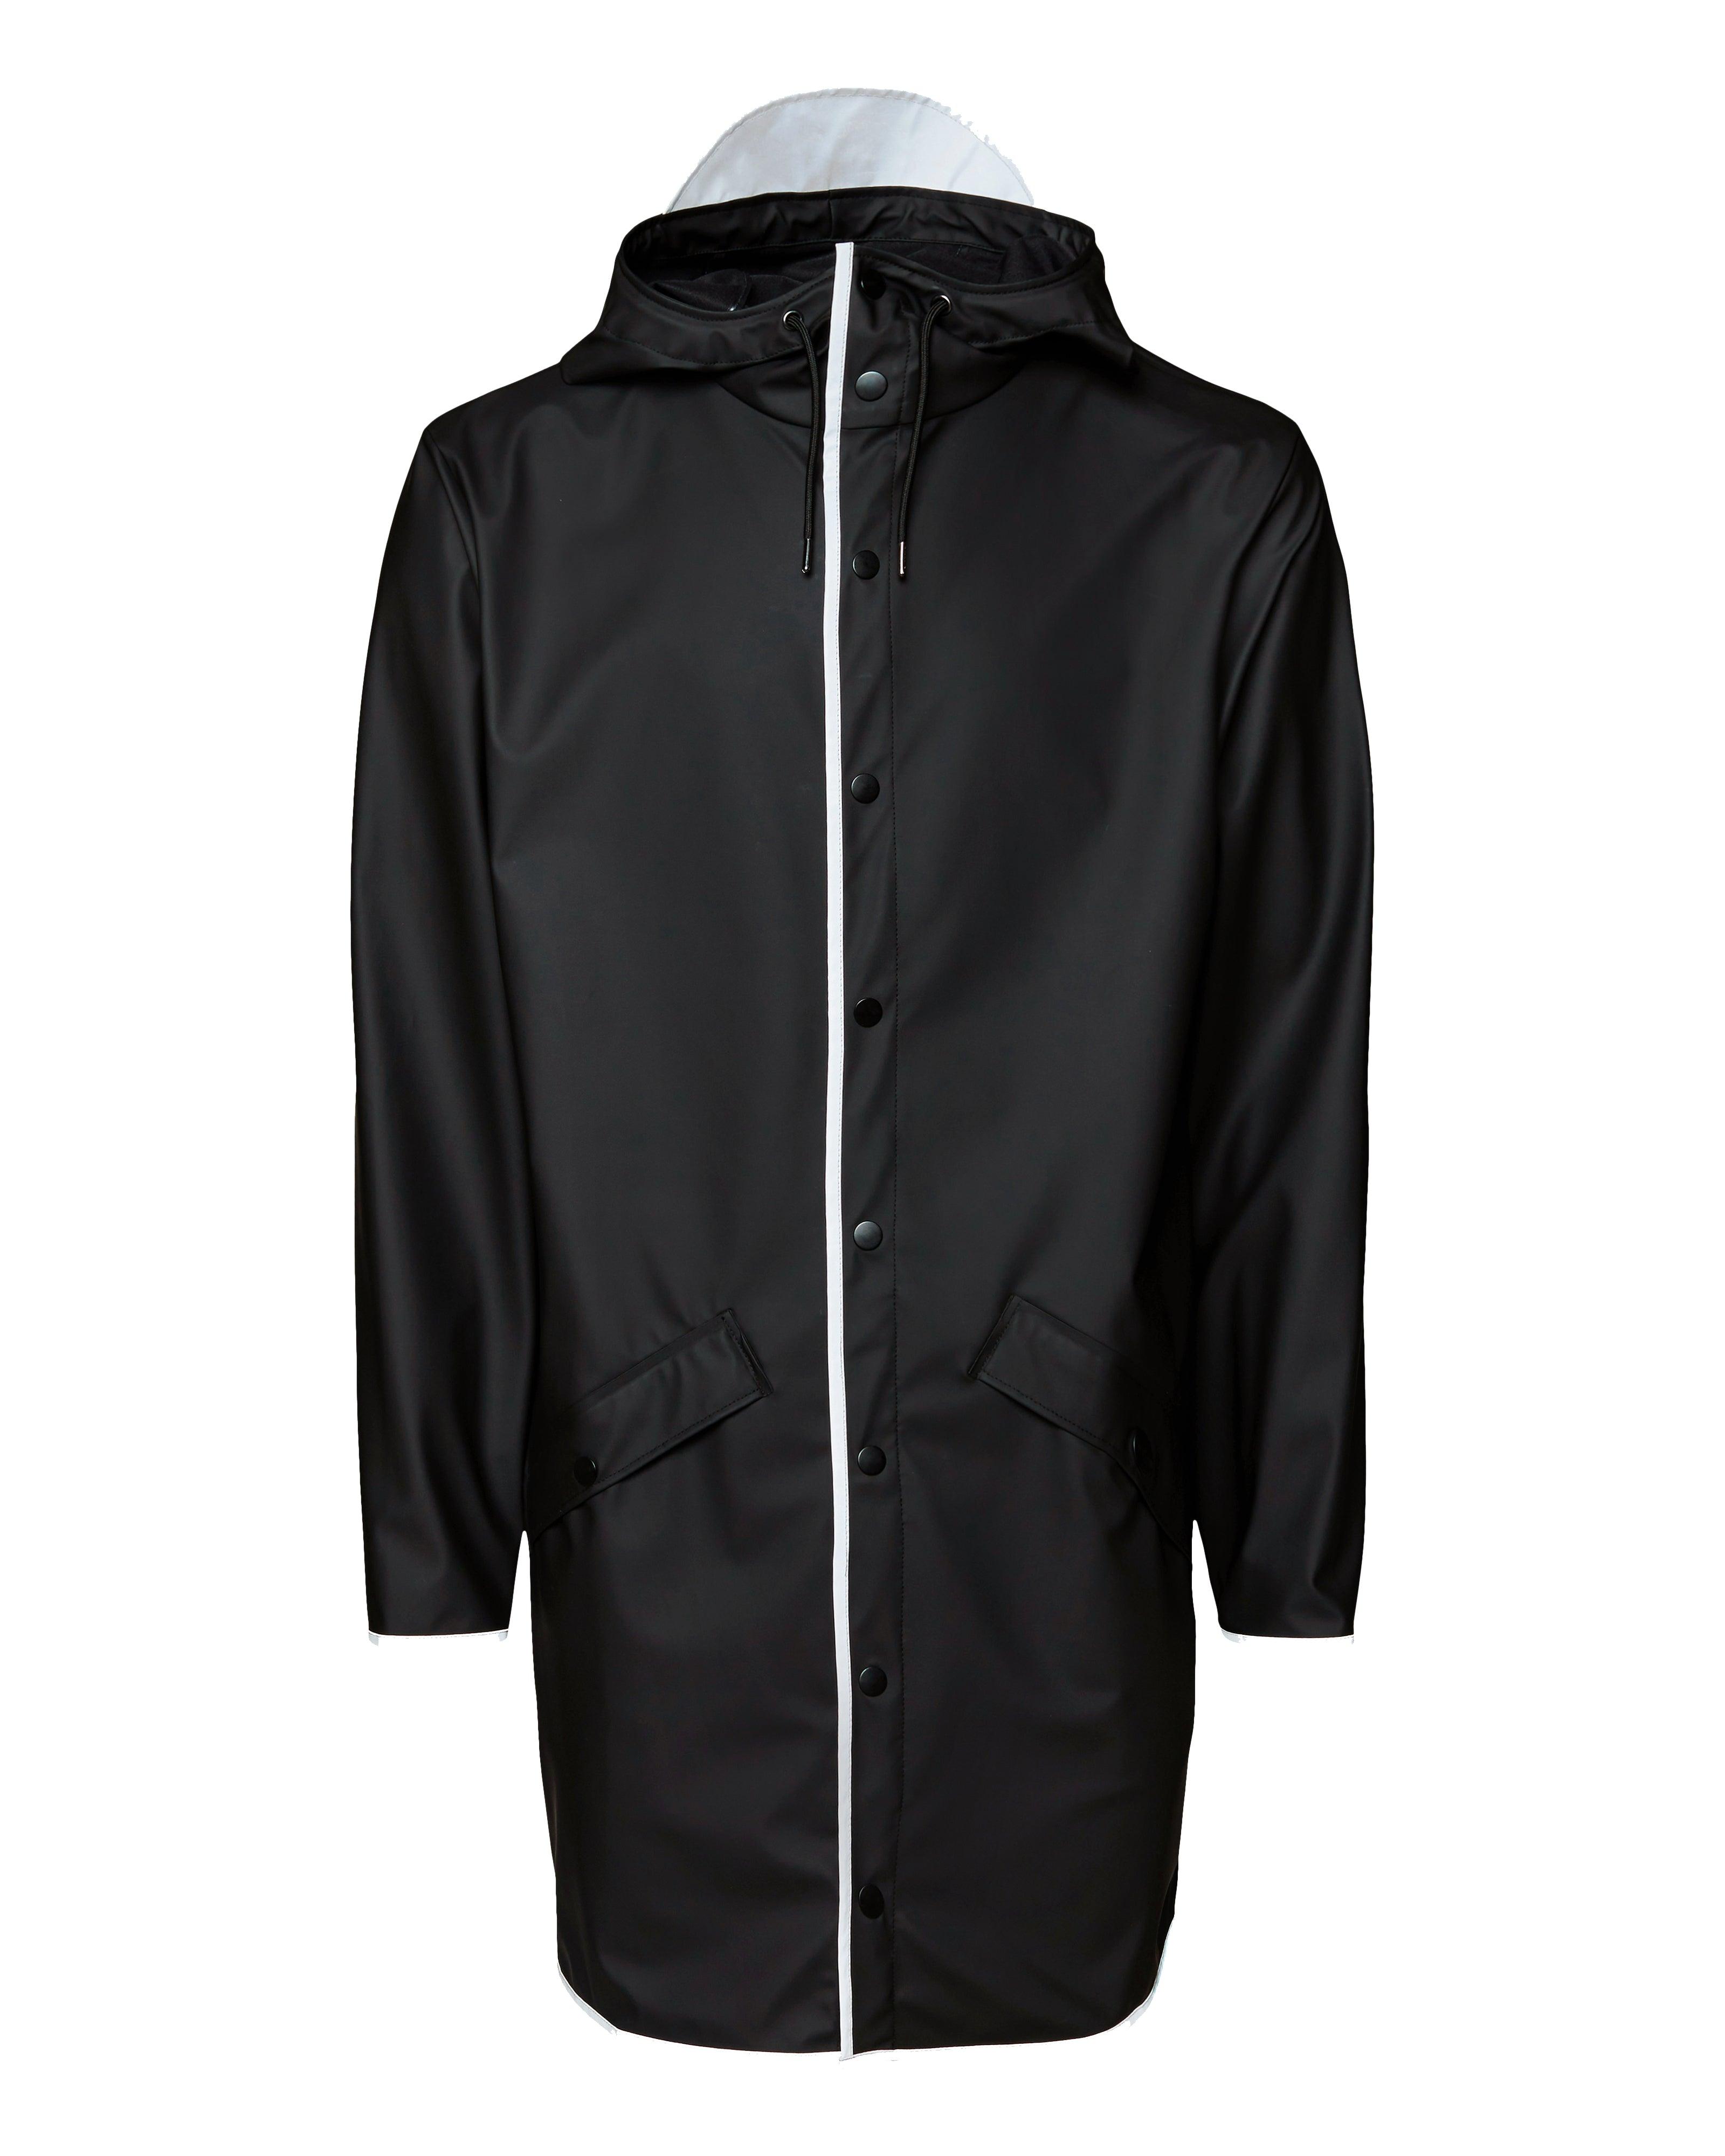 Rains Jackets Chubasquero Long Jacket in Black | Lyst